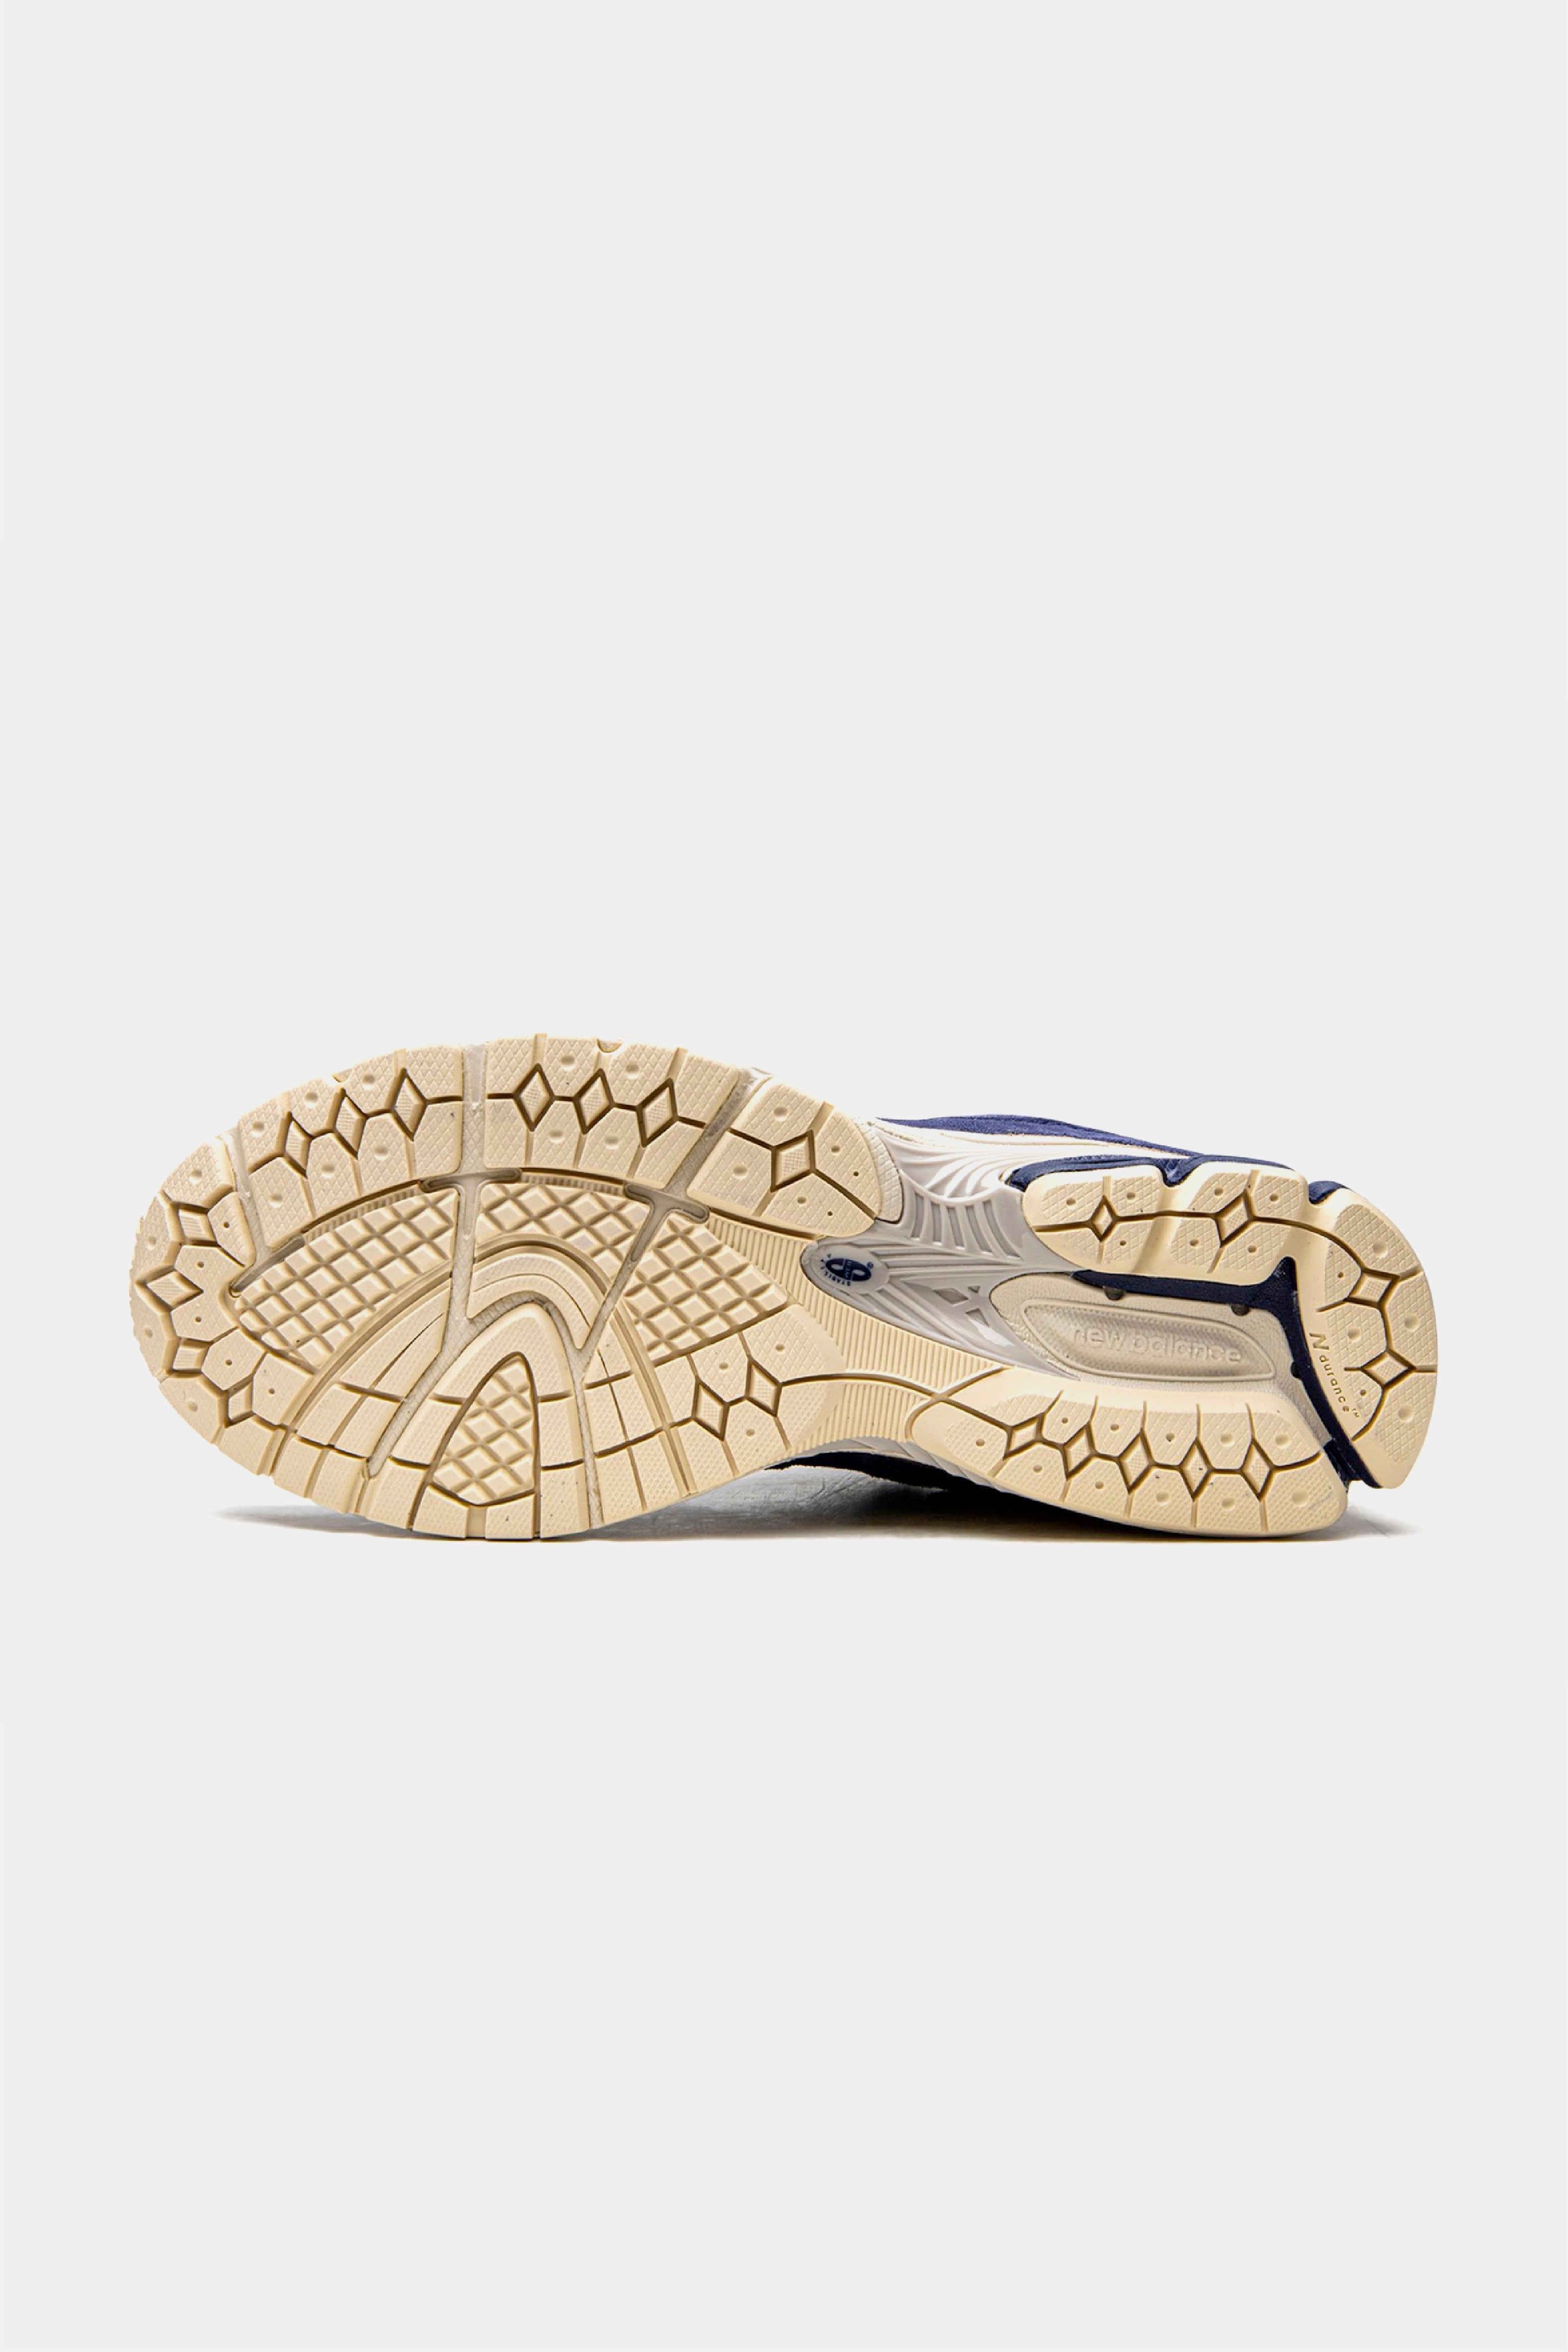 Selectshop FRAME - NEW BALANCE M2002RG "Night Tide" Footwear Concept Store Dubai